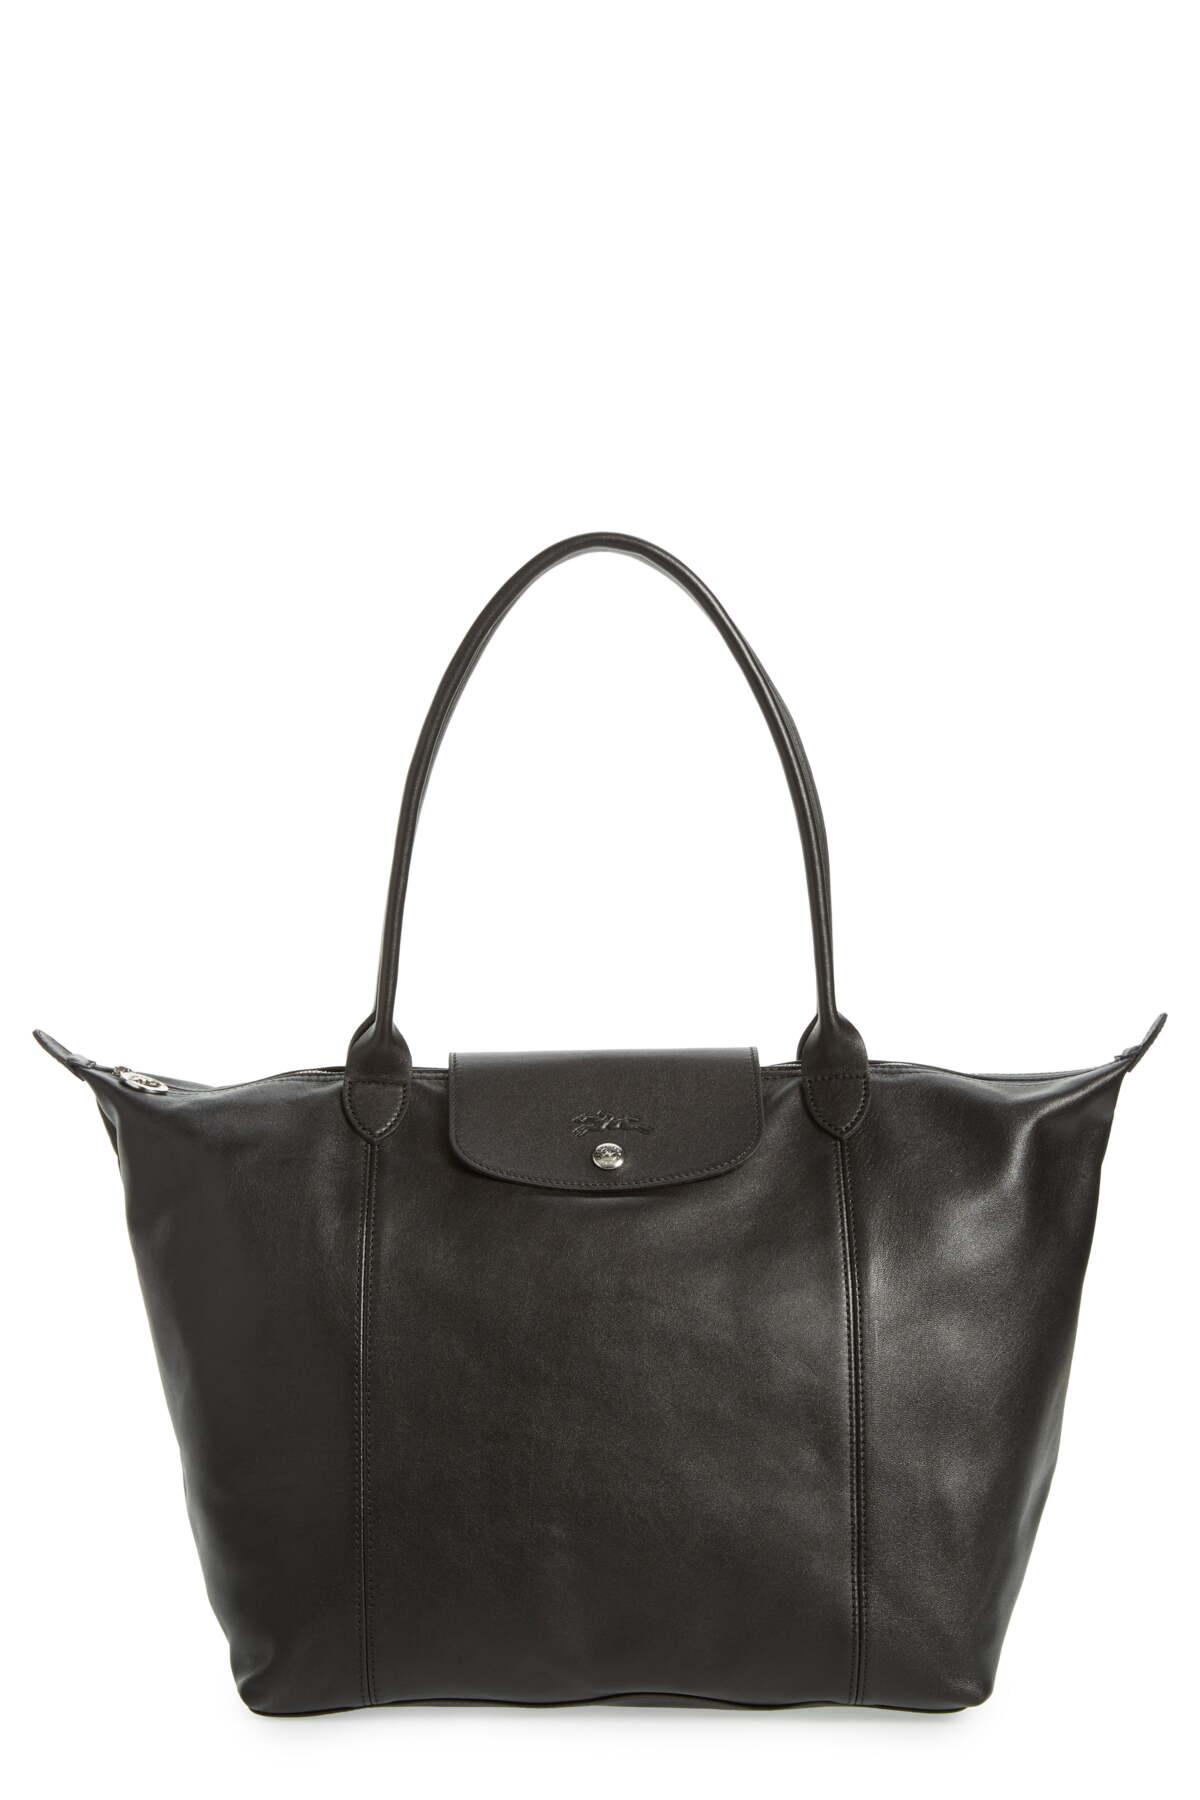 Longchamp - Authenticated Pliage Handbag - Leather Black Plain for Women, Very Good Condition